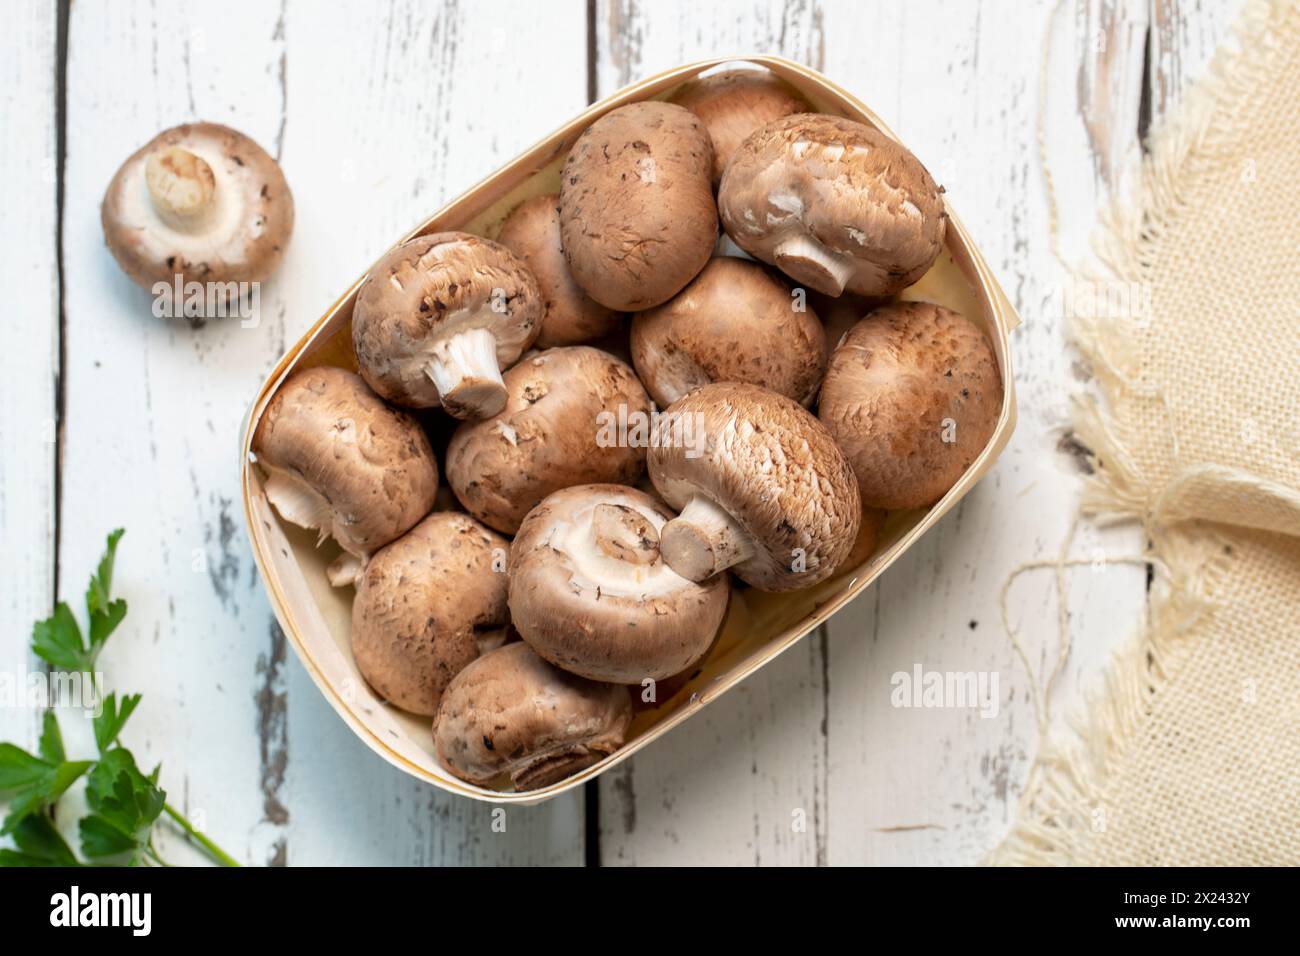 Brawn basket with brown mushrooms Stock Photo